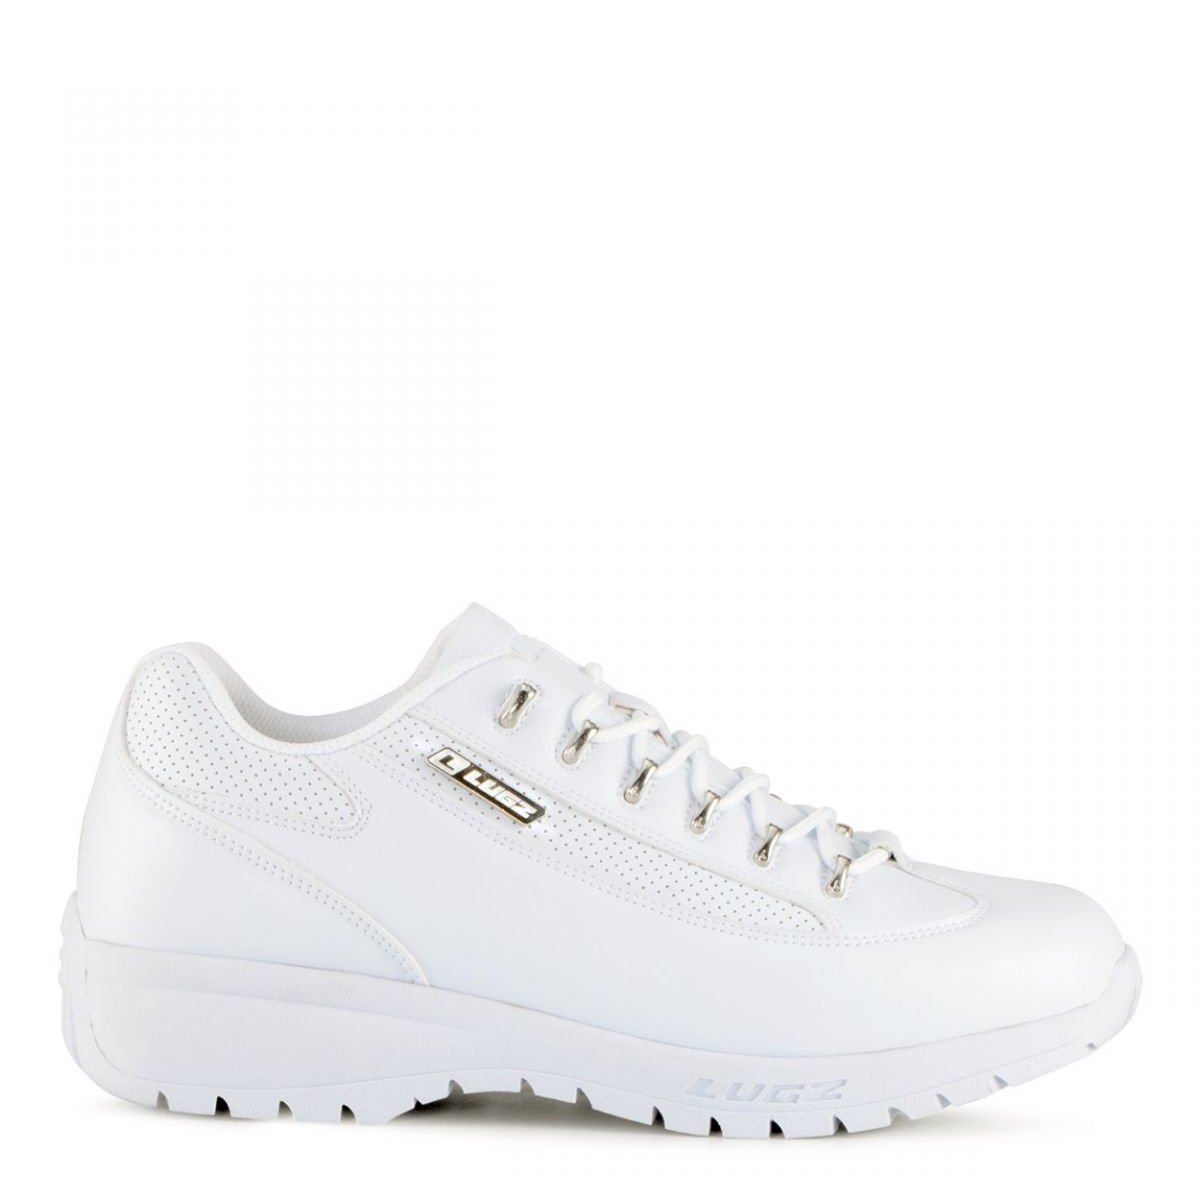 Lugz Men's Express Sneaker White - MEXPRSPV-100 WHITE - WHITE, 10